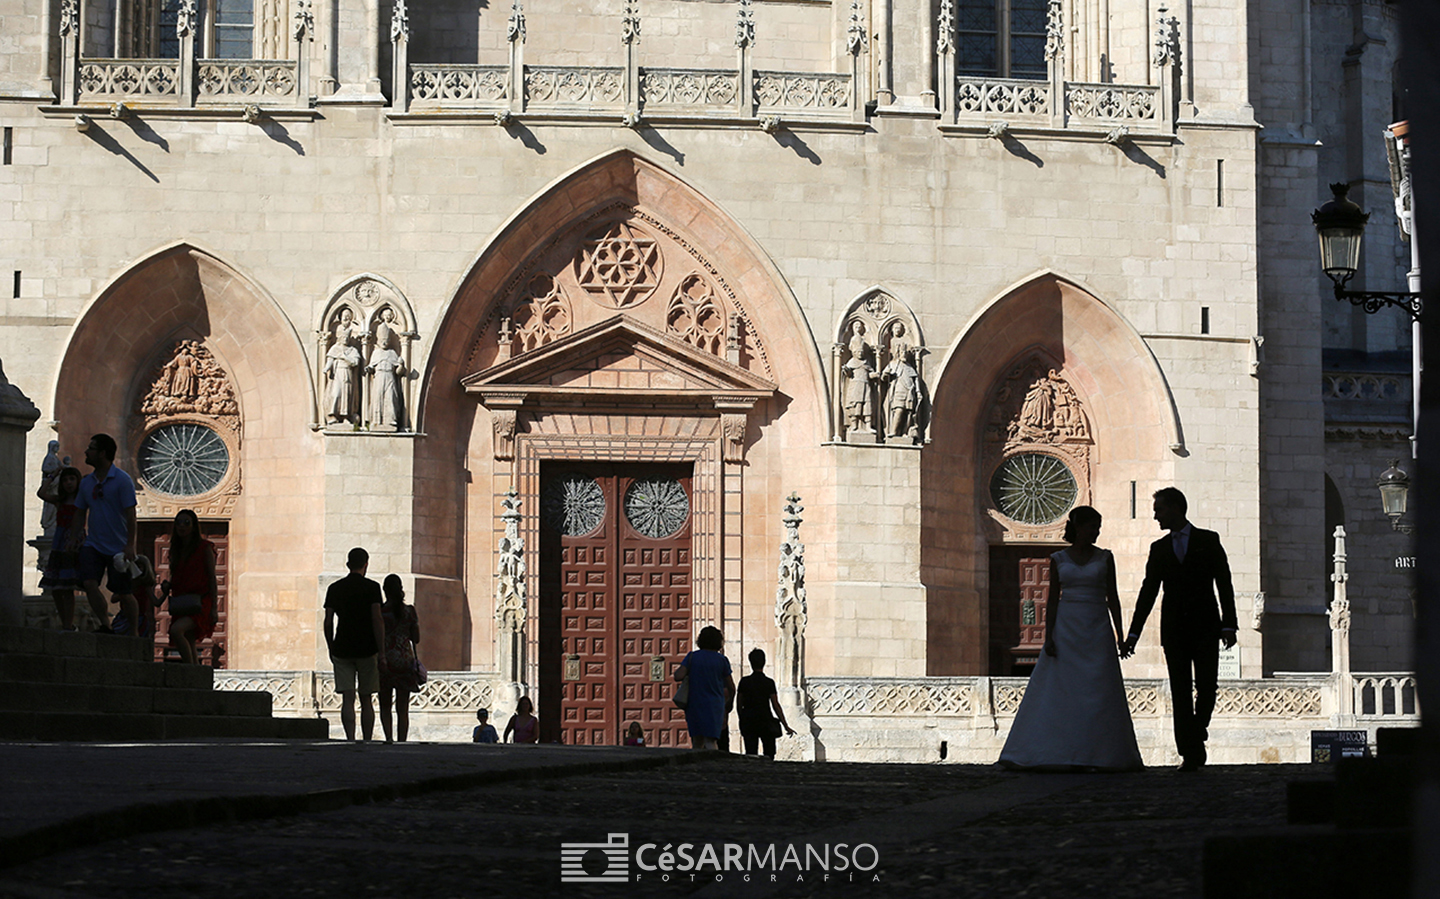 César Manso Fotógrafo: Fotógrafos de boda en Burgos - Boda%20AlejandrayJairo-27.JPG